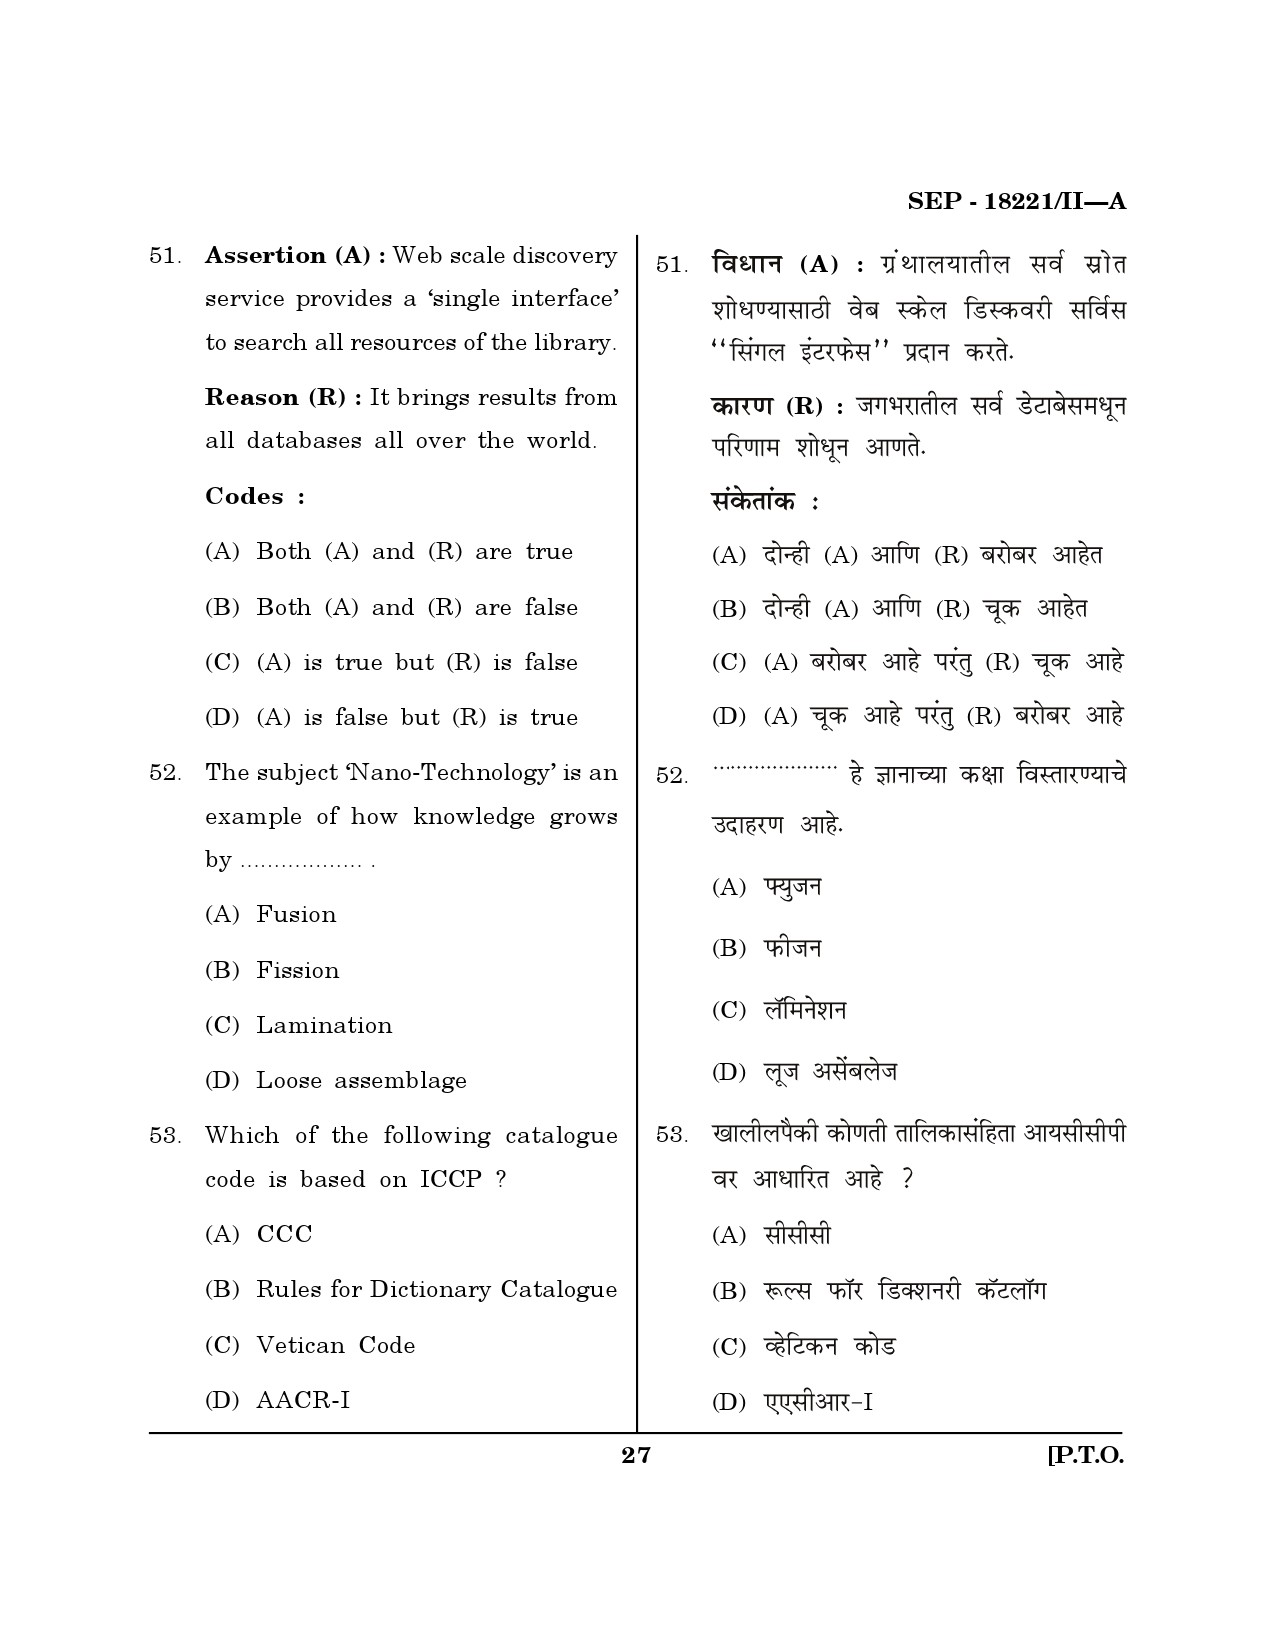 Maharashtra SET Library Information Science Exam Question Paper September 2021 26